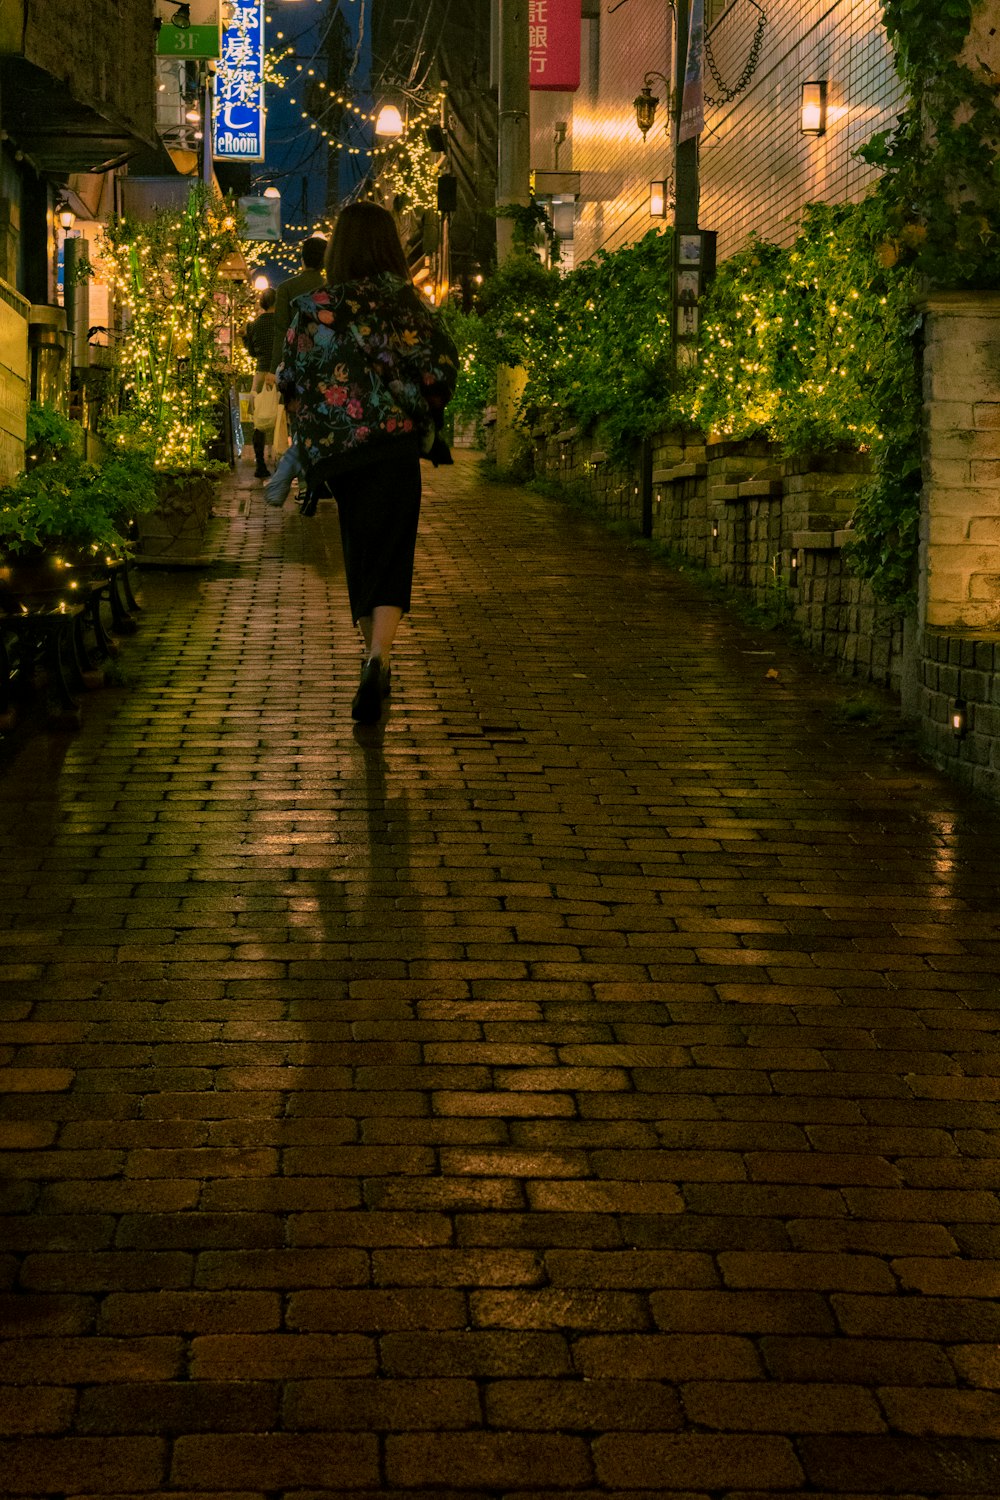 a person walking down a brick street